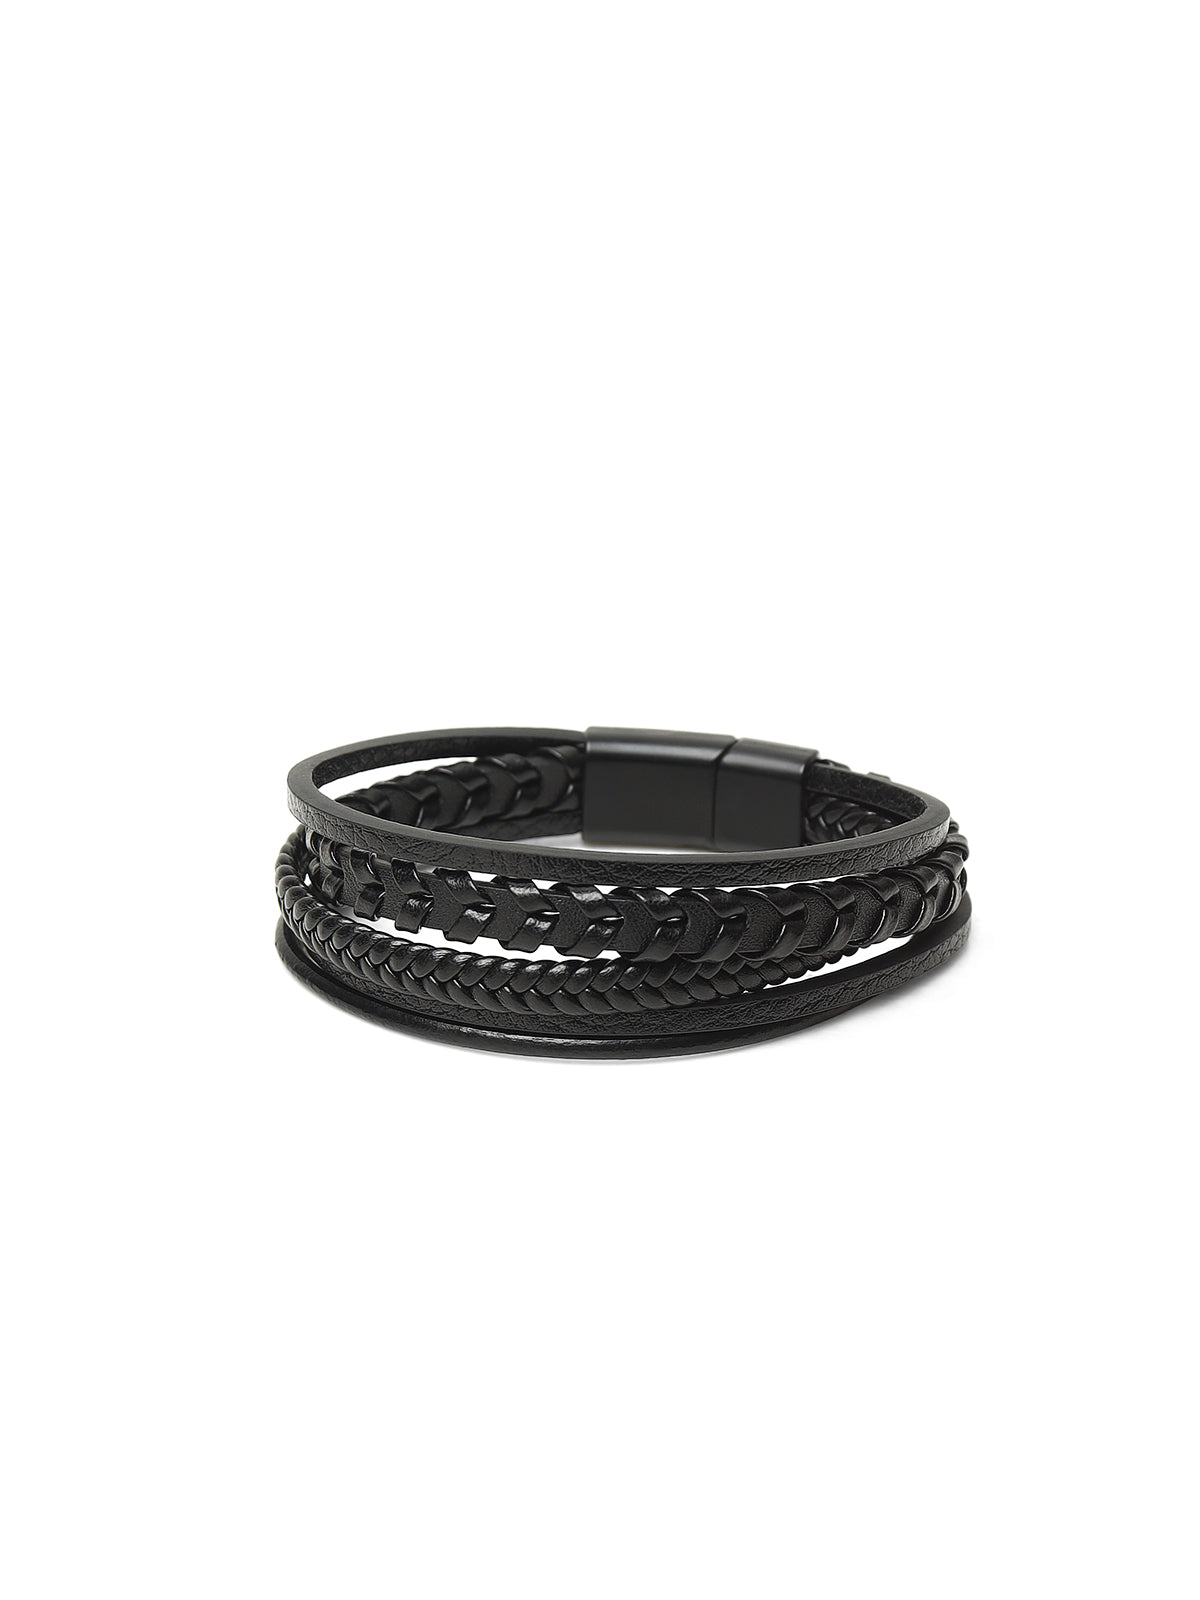 Black Leather Bracelet - FABR24-013